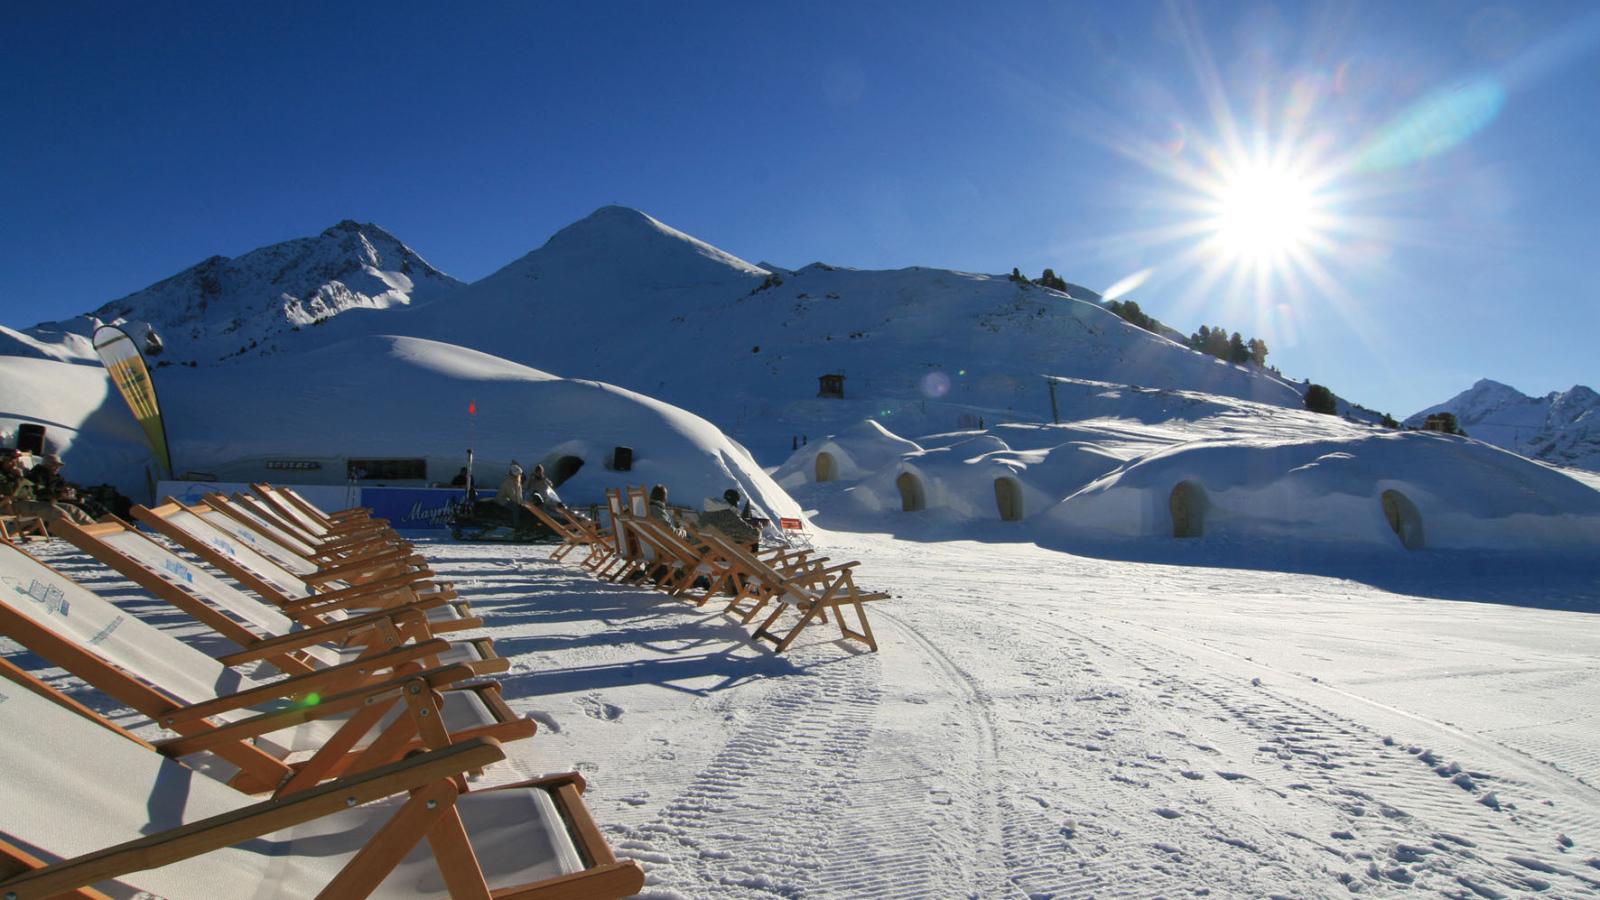 Winter holiday in the ski resort of Mayrhofen, Austria